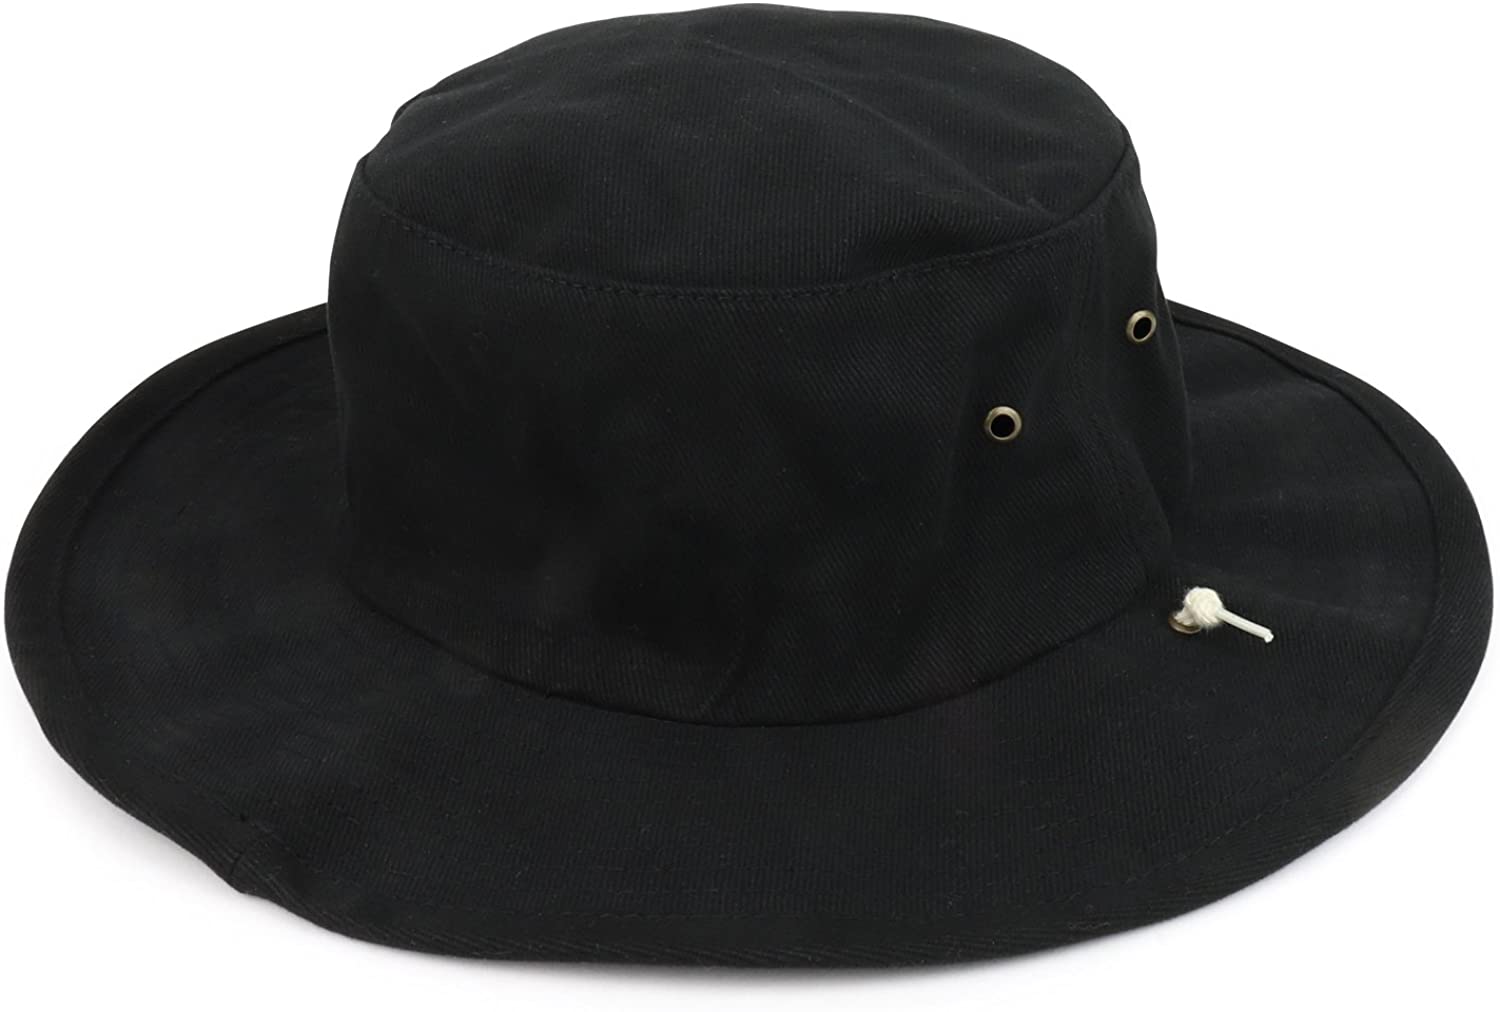 Armycrew Plain Aussie Cotton Chin Cord Fisherman's Hat